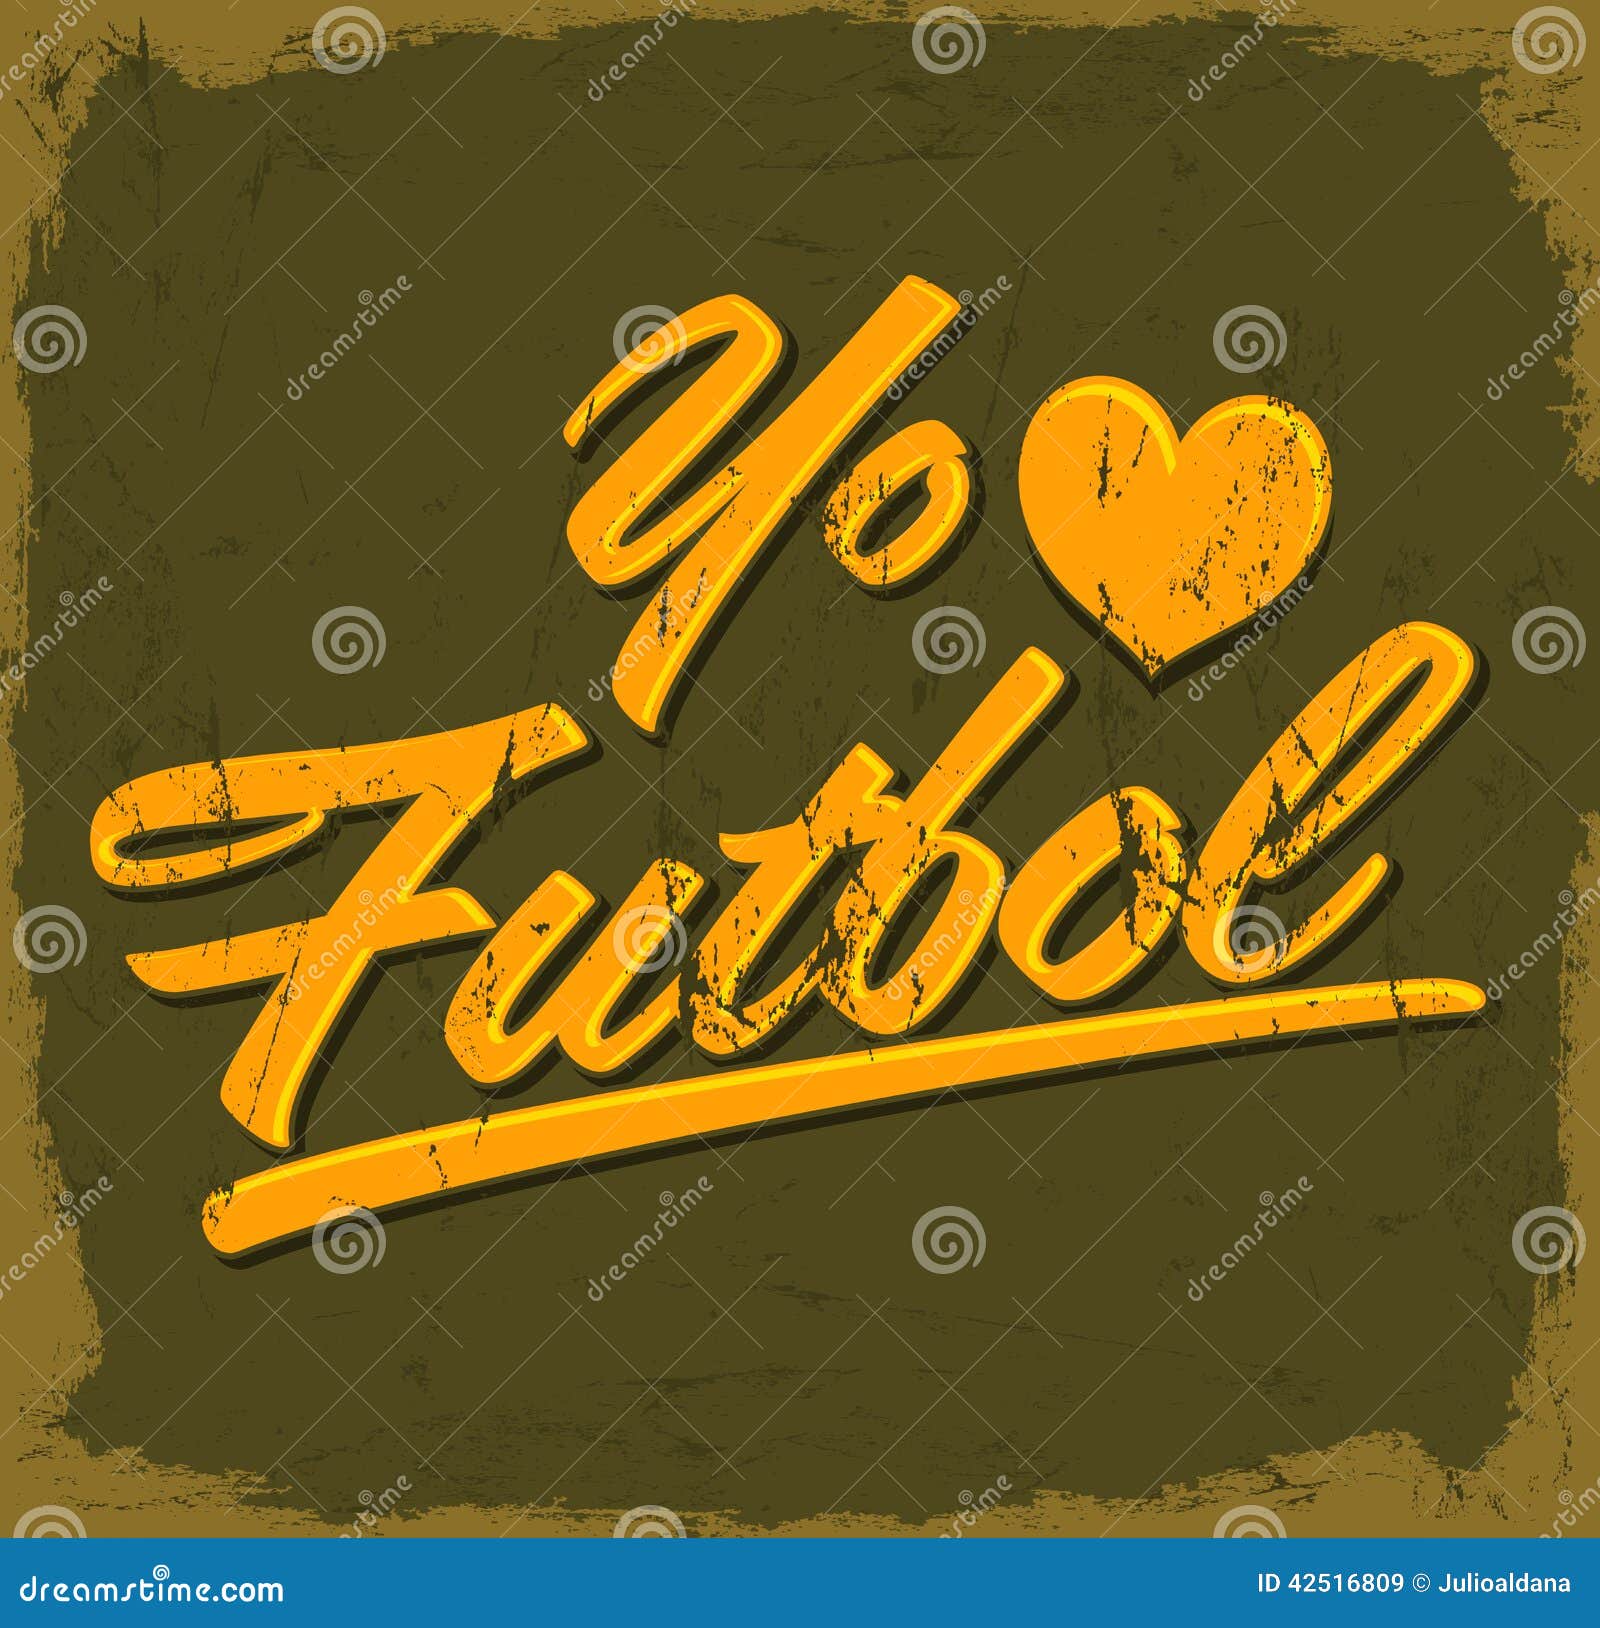 Yo Amo El Futbol - I Love Soccer - Football Spanish Text Stock Vector